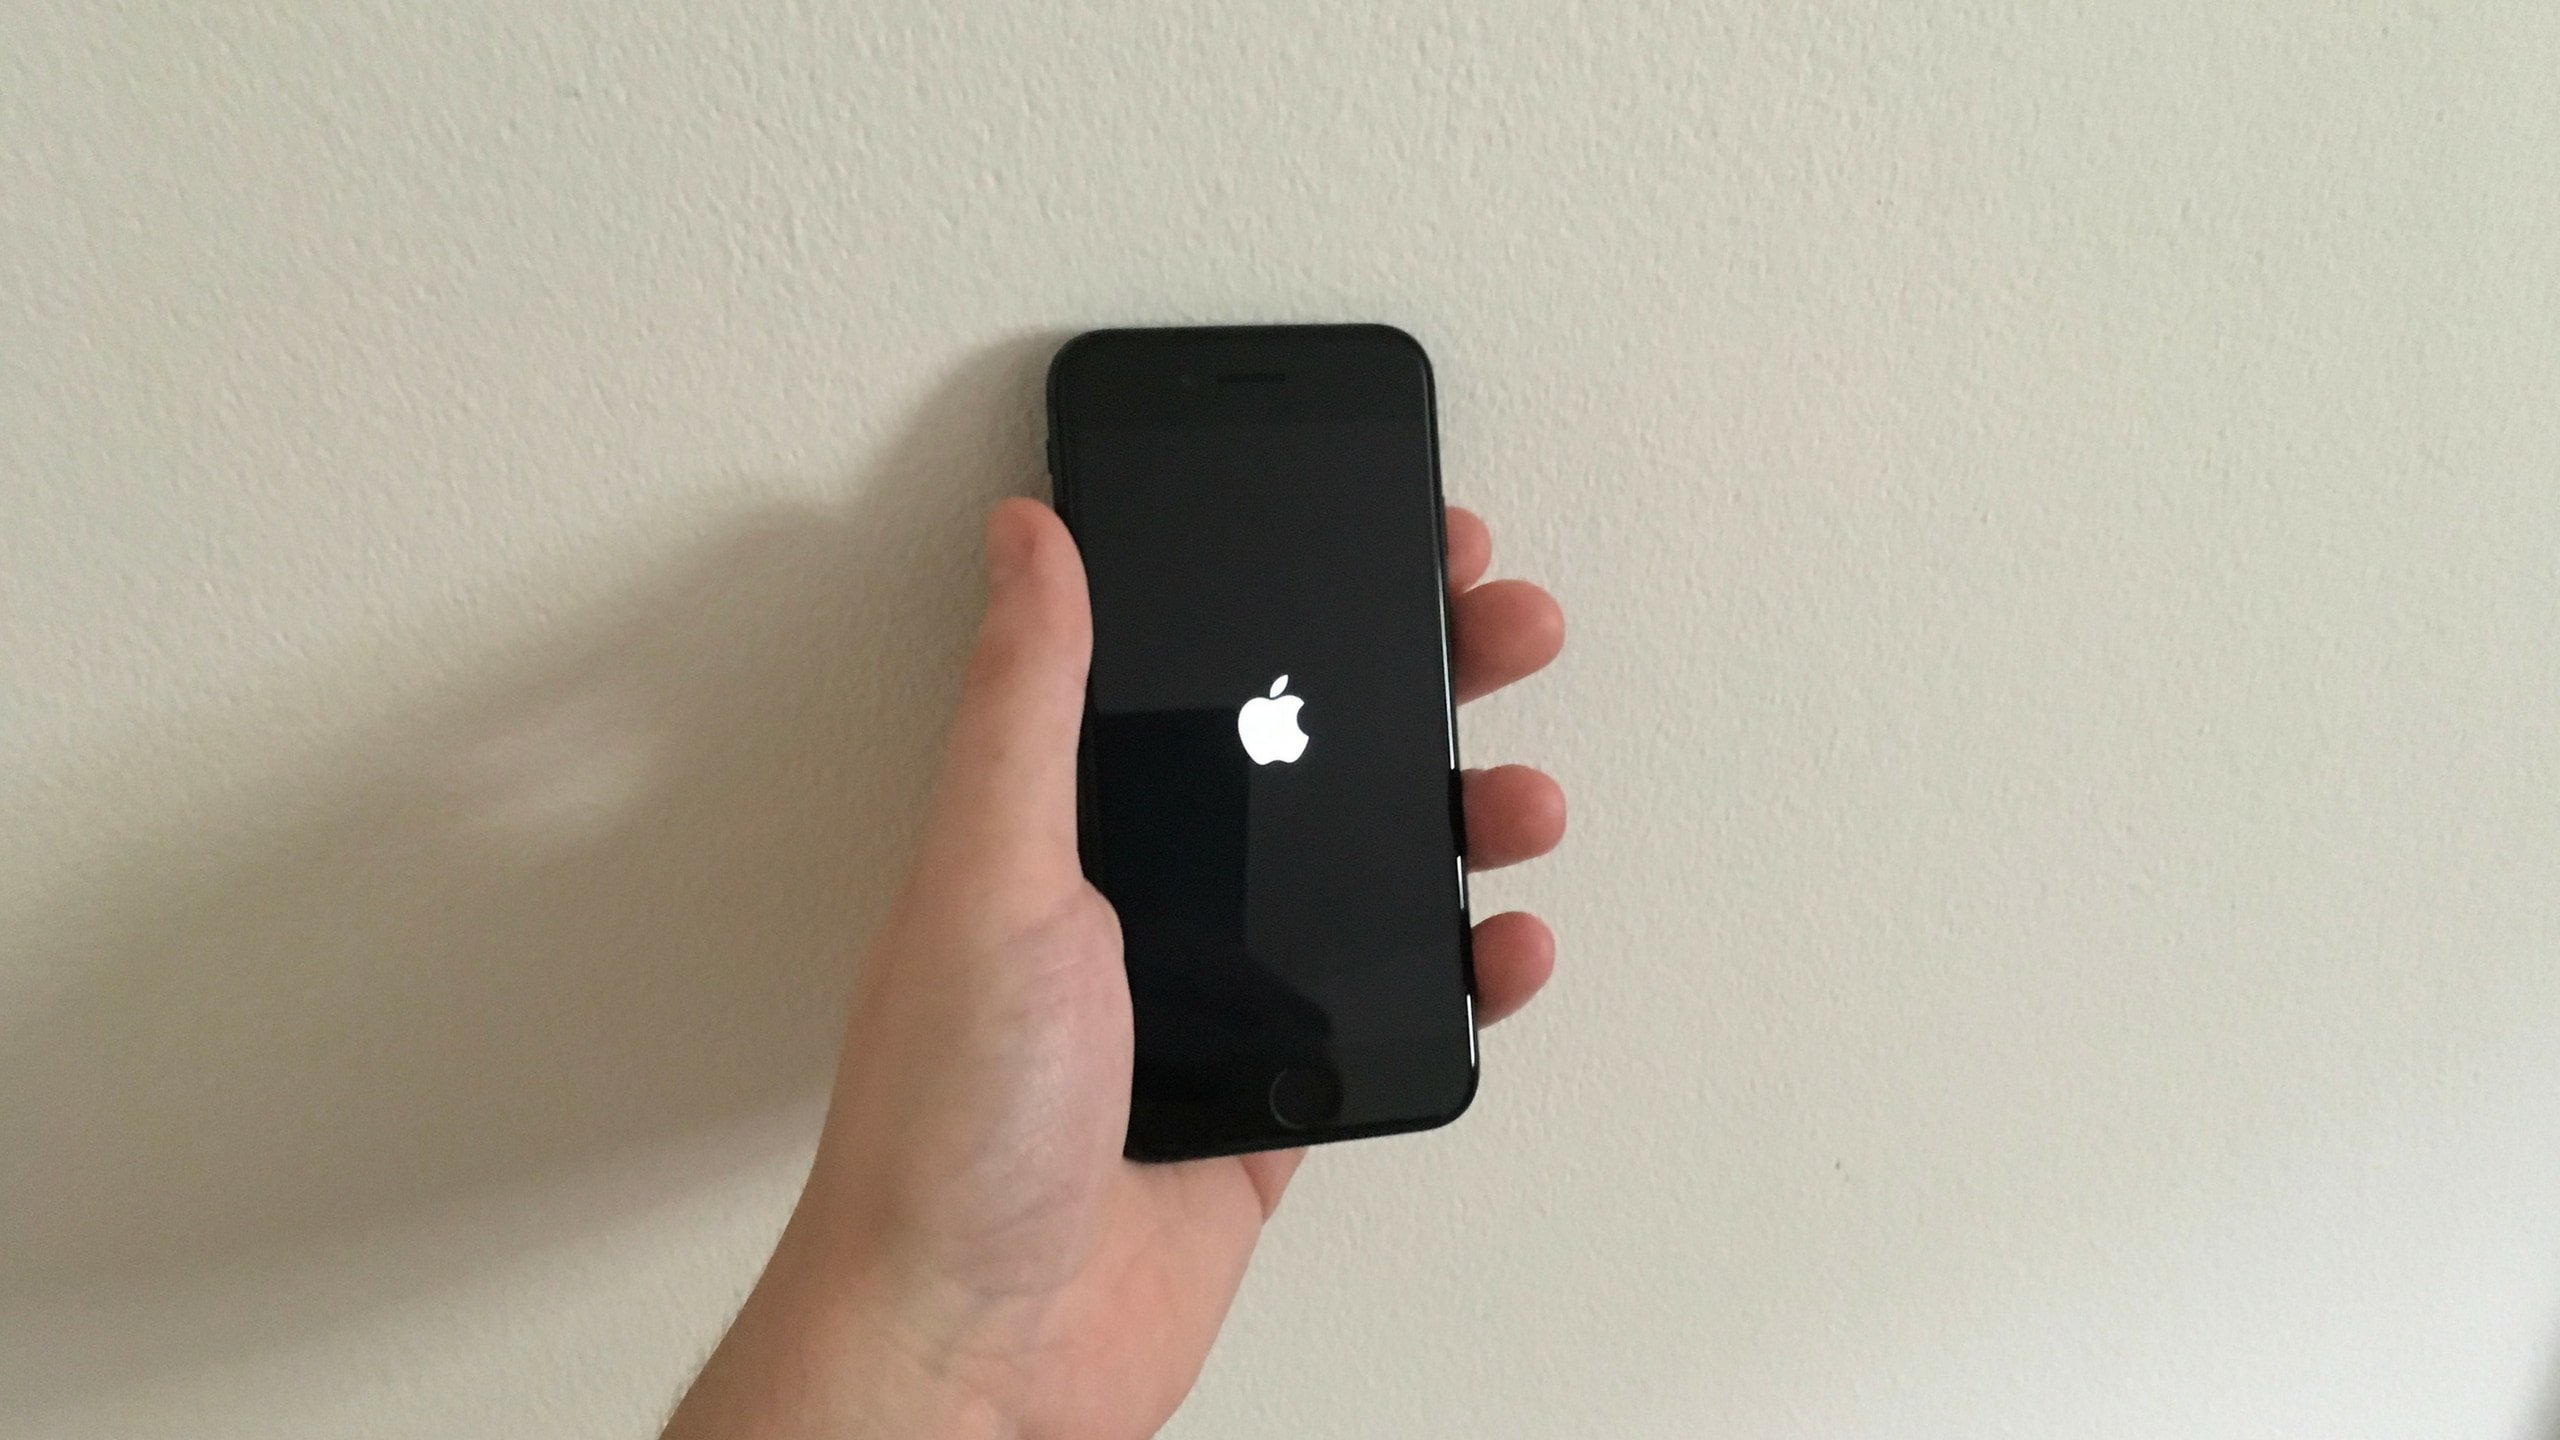 phone stuck on apple logo iphone xr